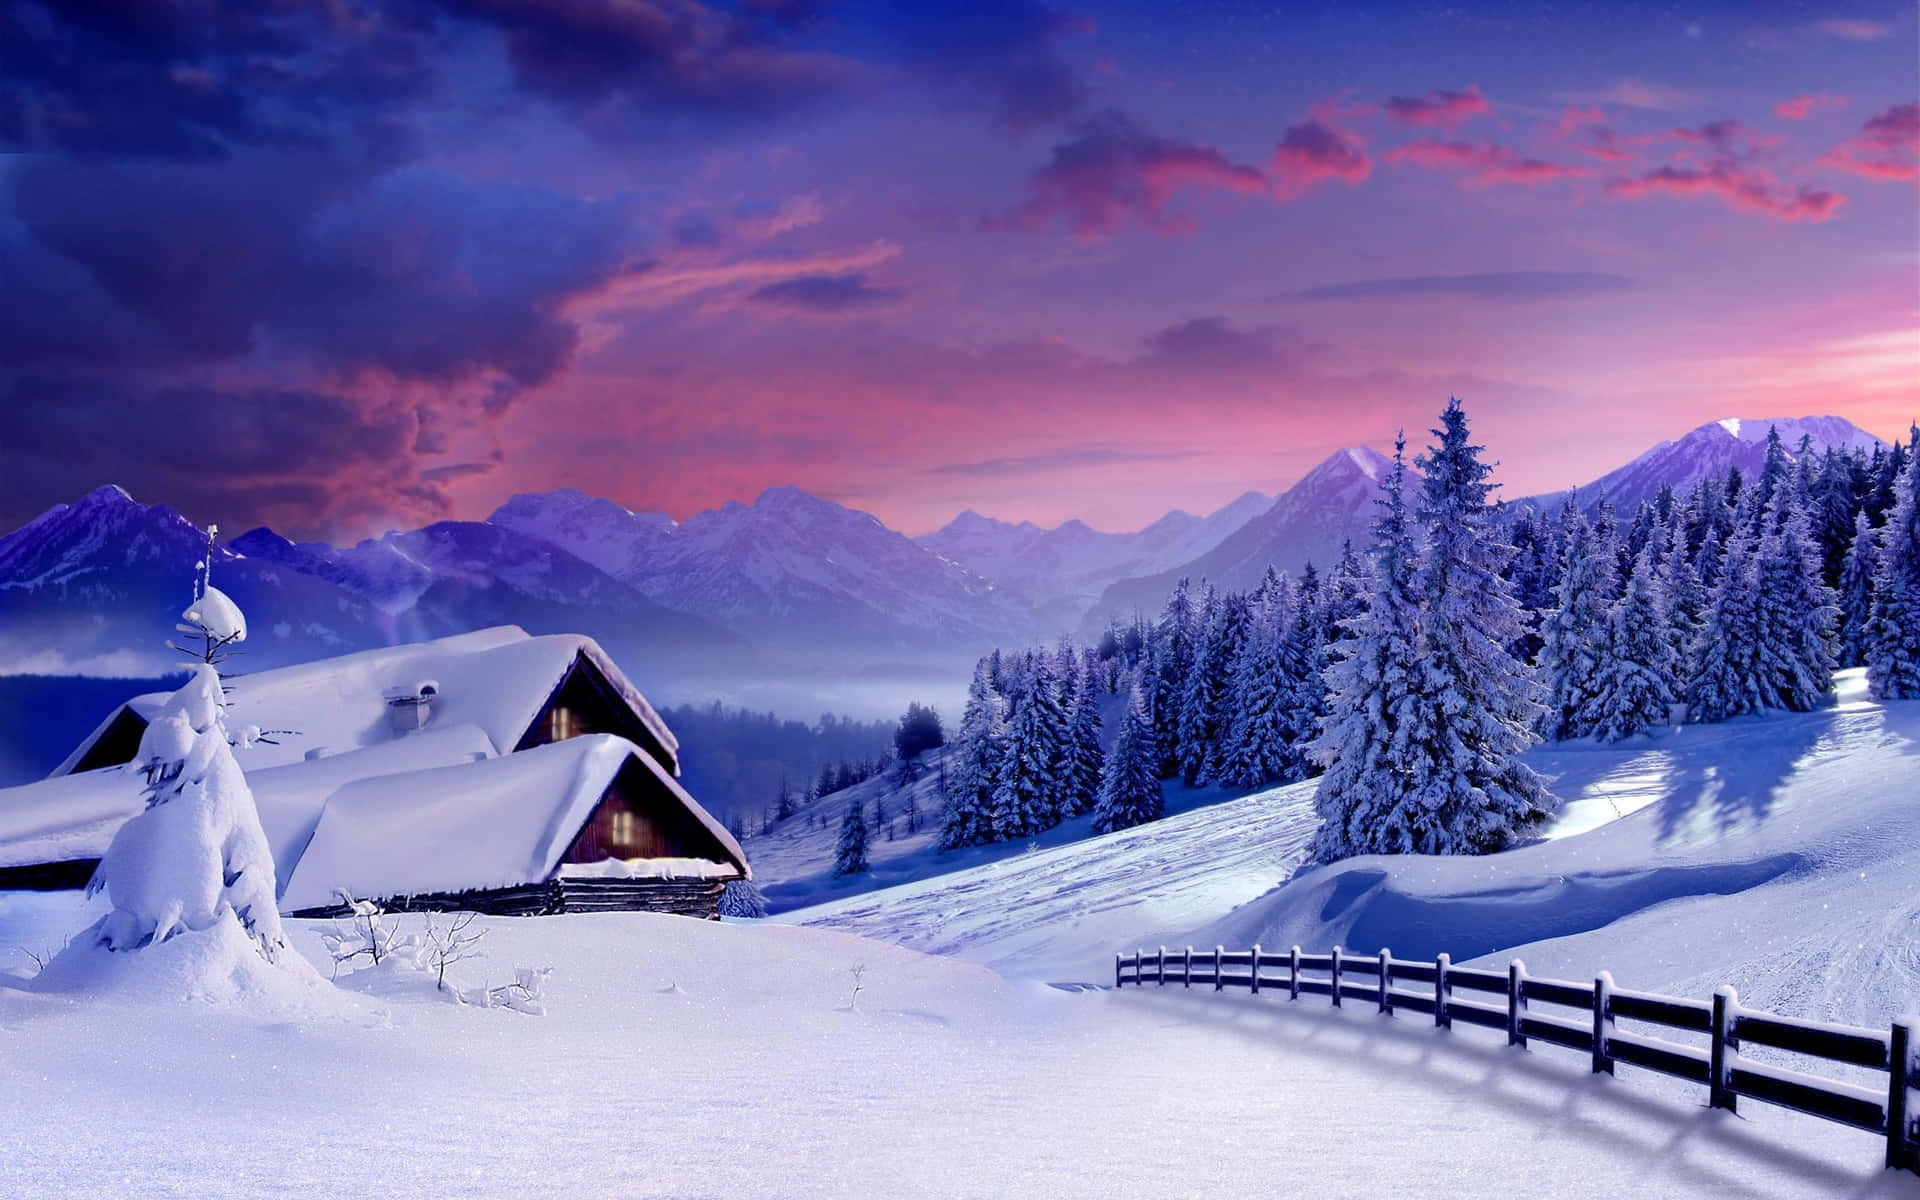 Snow queen in a winter wonderland with swiss mountain background